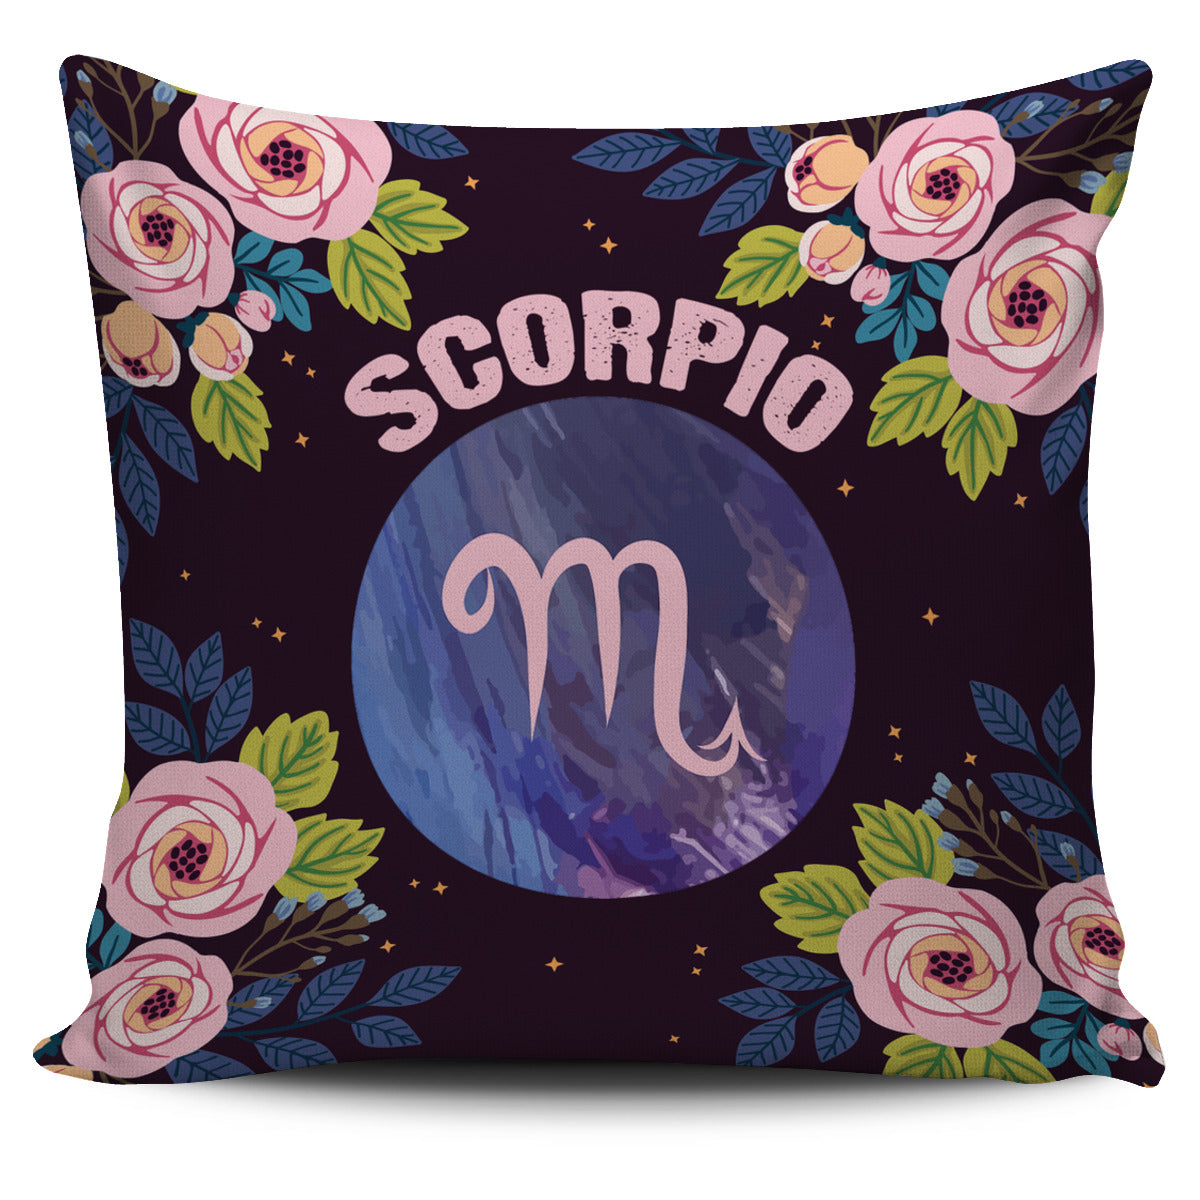 Scorpio Vibes Pillow Cover